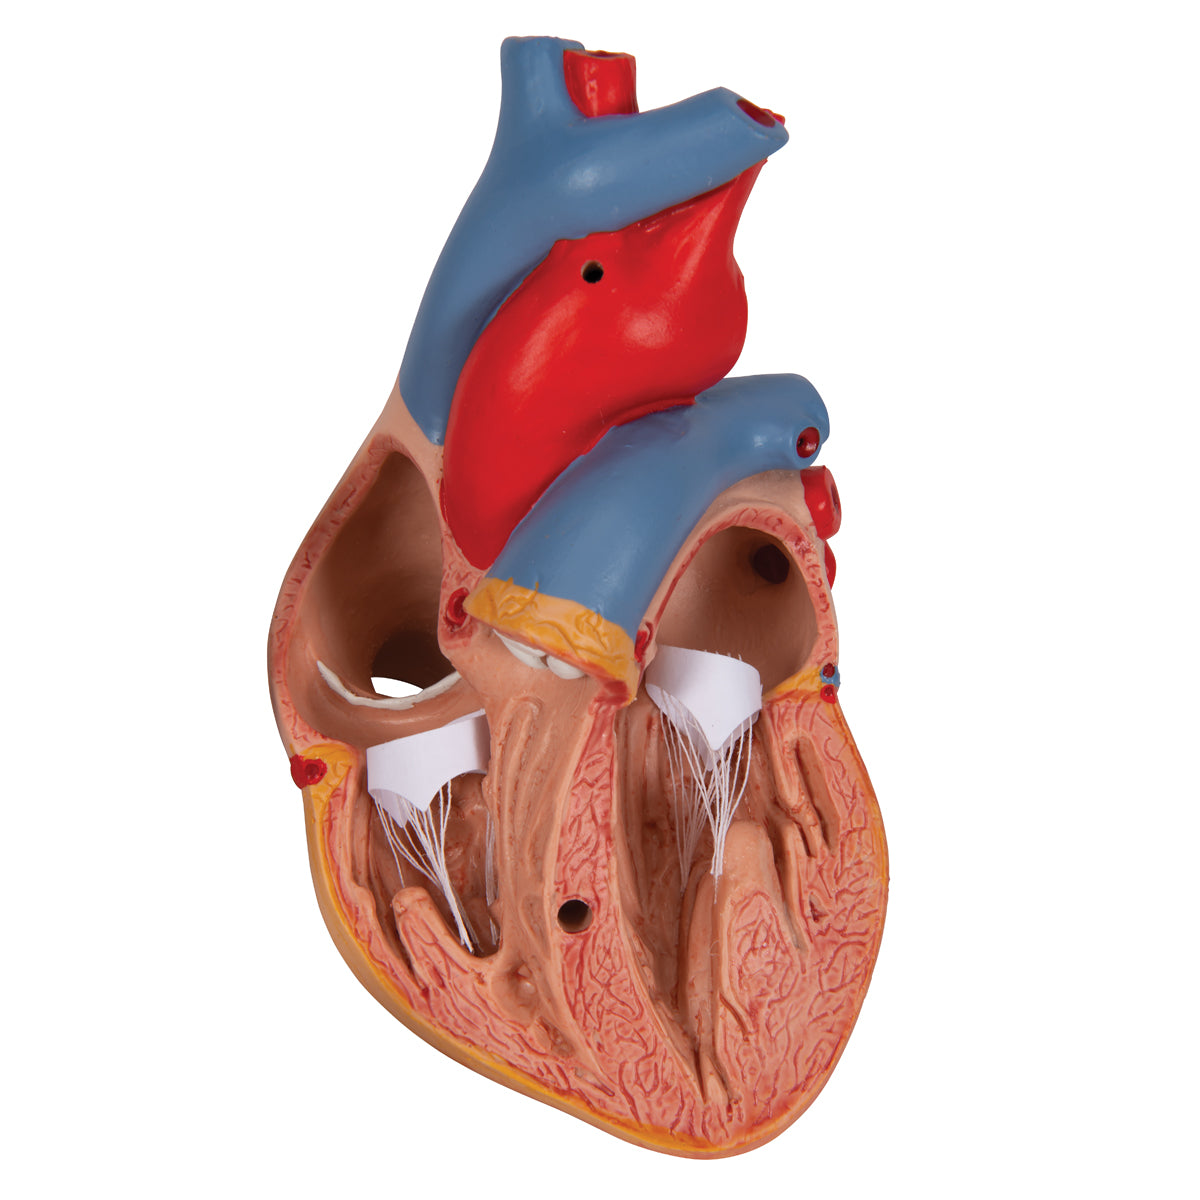 Reducerad hjärtmodell inklusive tymus